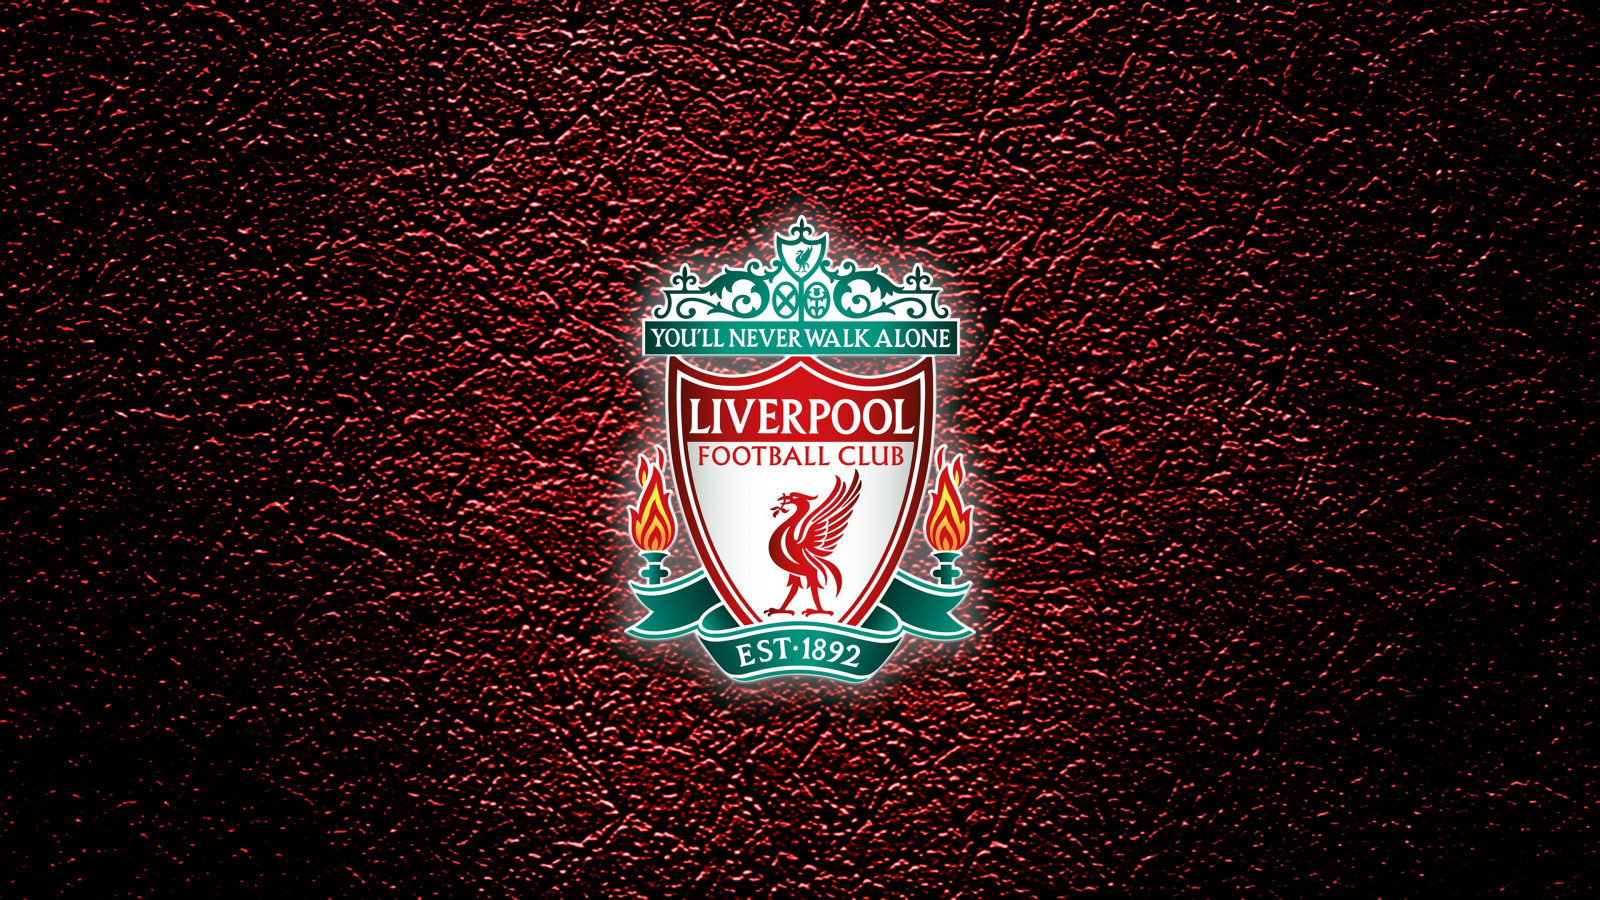 Download wallpaper: Liverpool - You'll never walk alone 1600x900